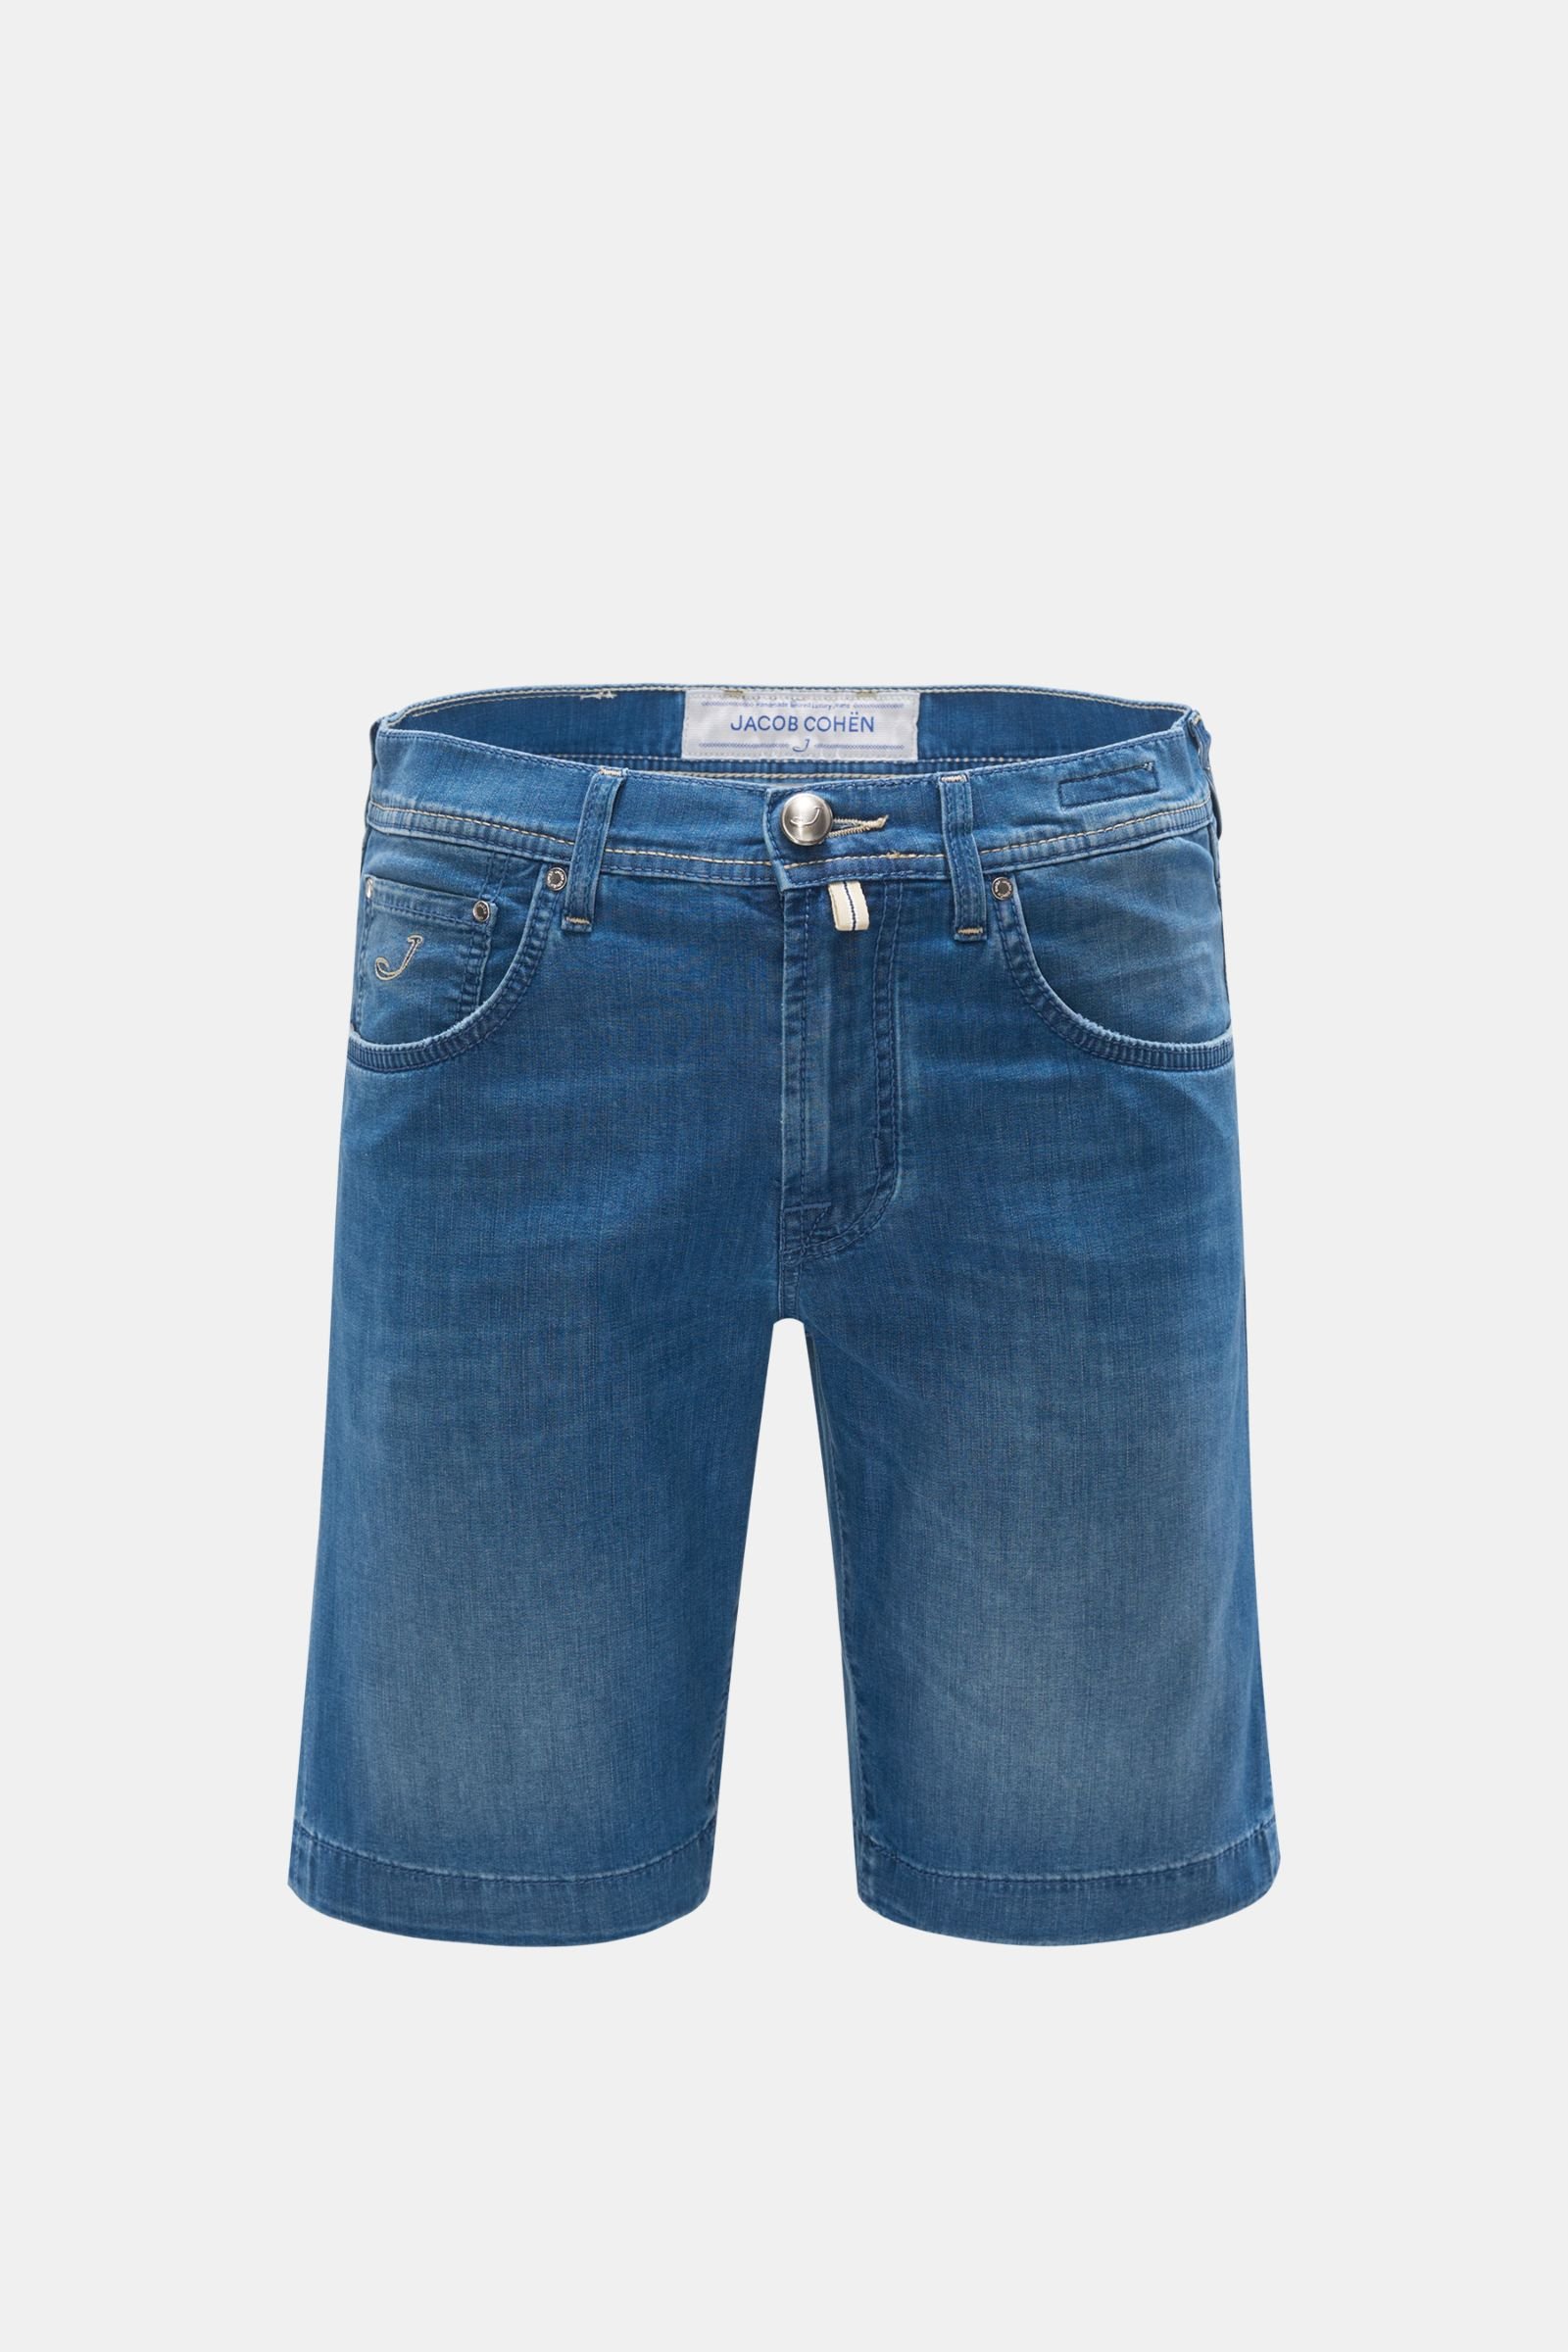 Denim Bermuda shorts 'J6636 Comfort Slim Fit' grey-blue